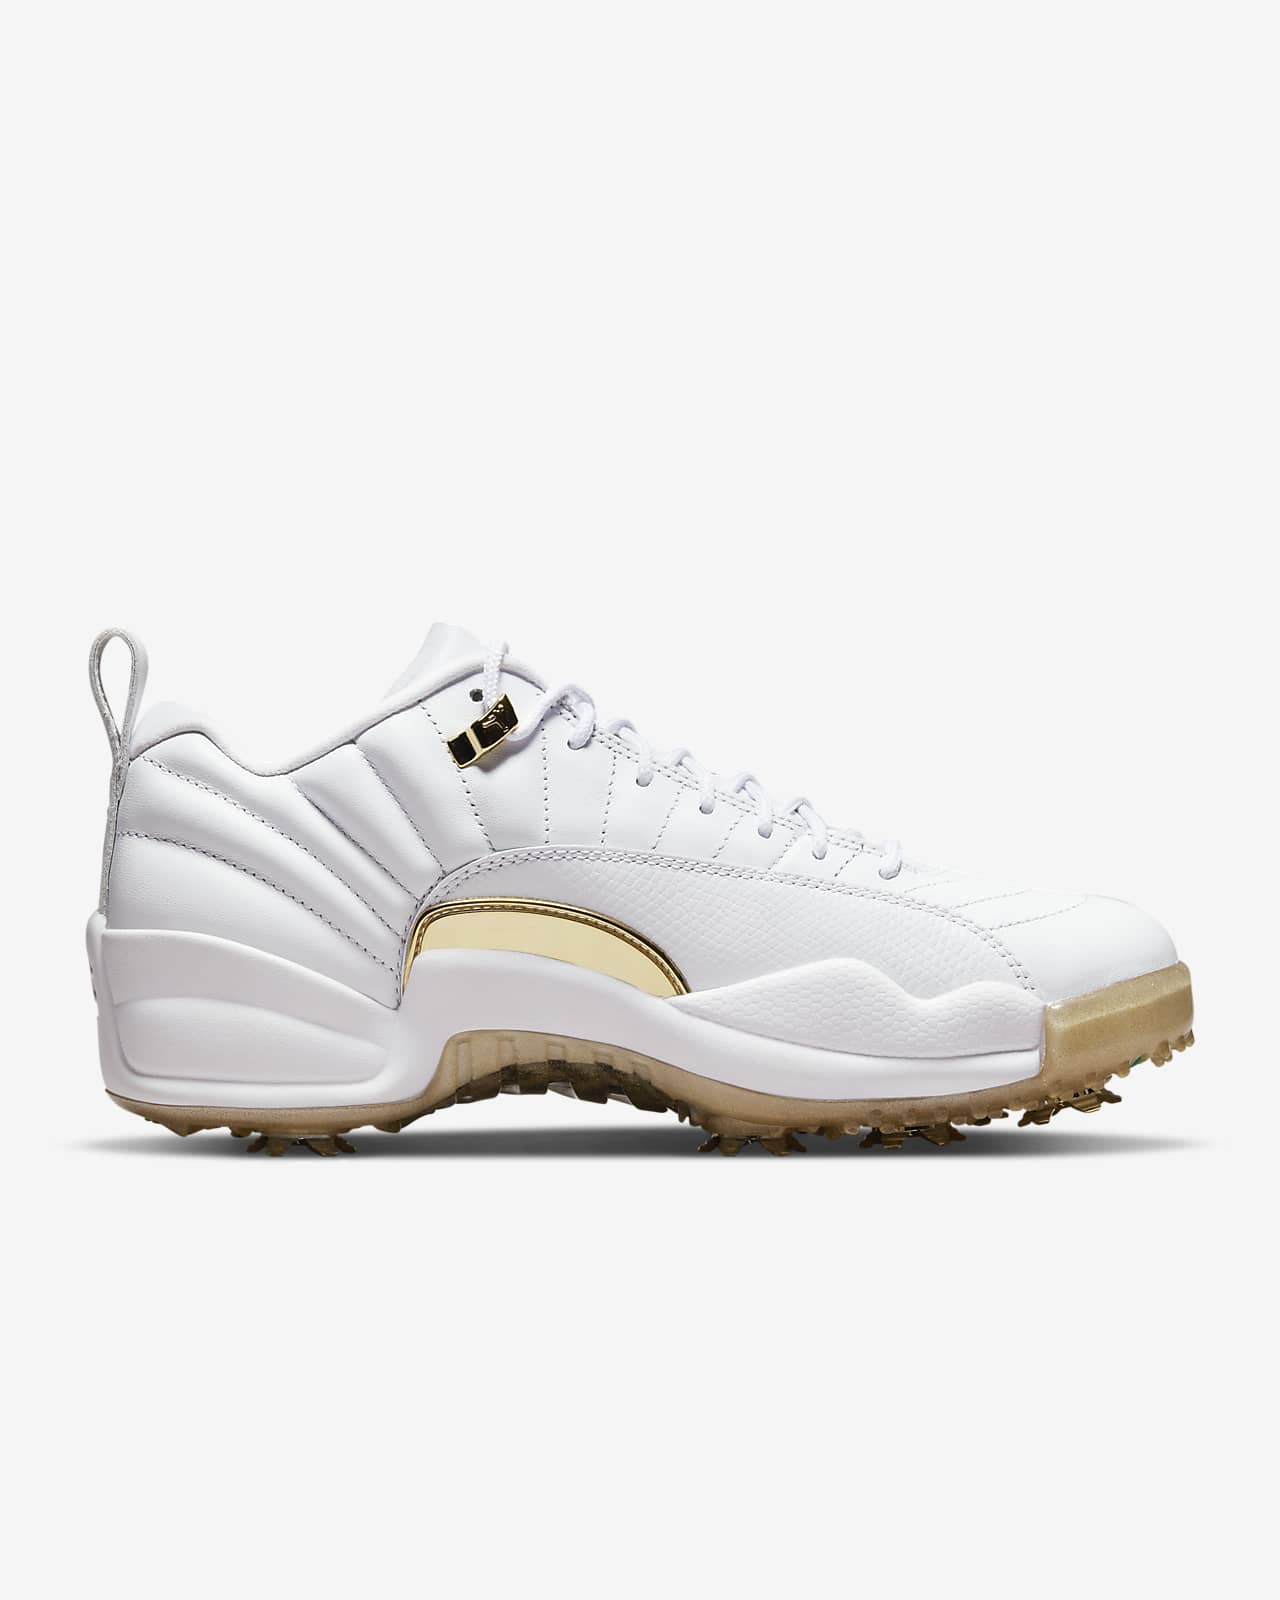 Jordan XII G Golf Shoes. Nike LU